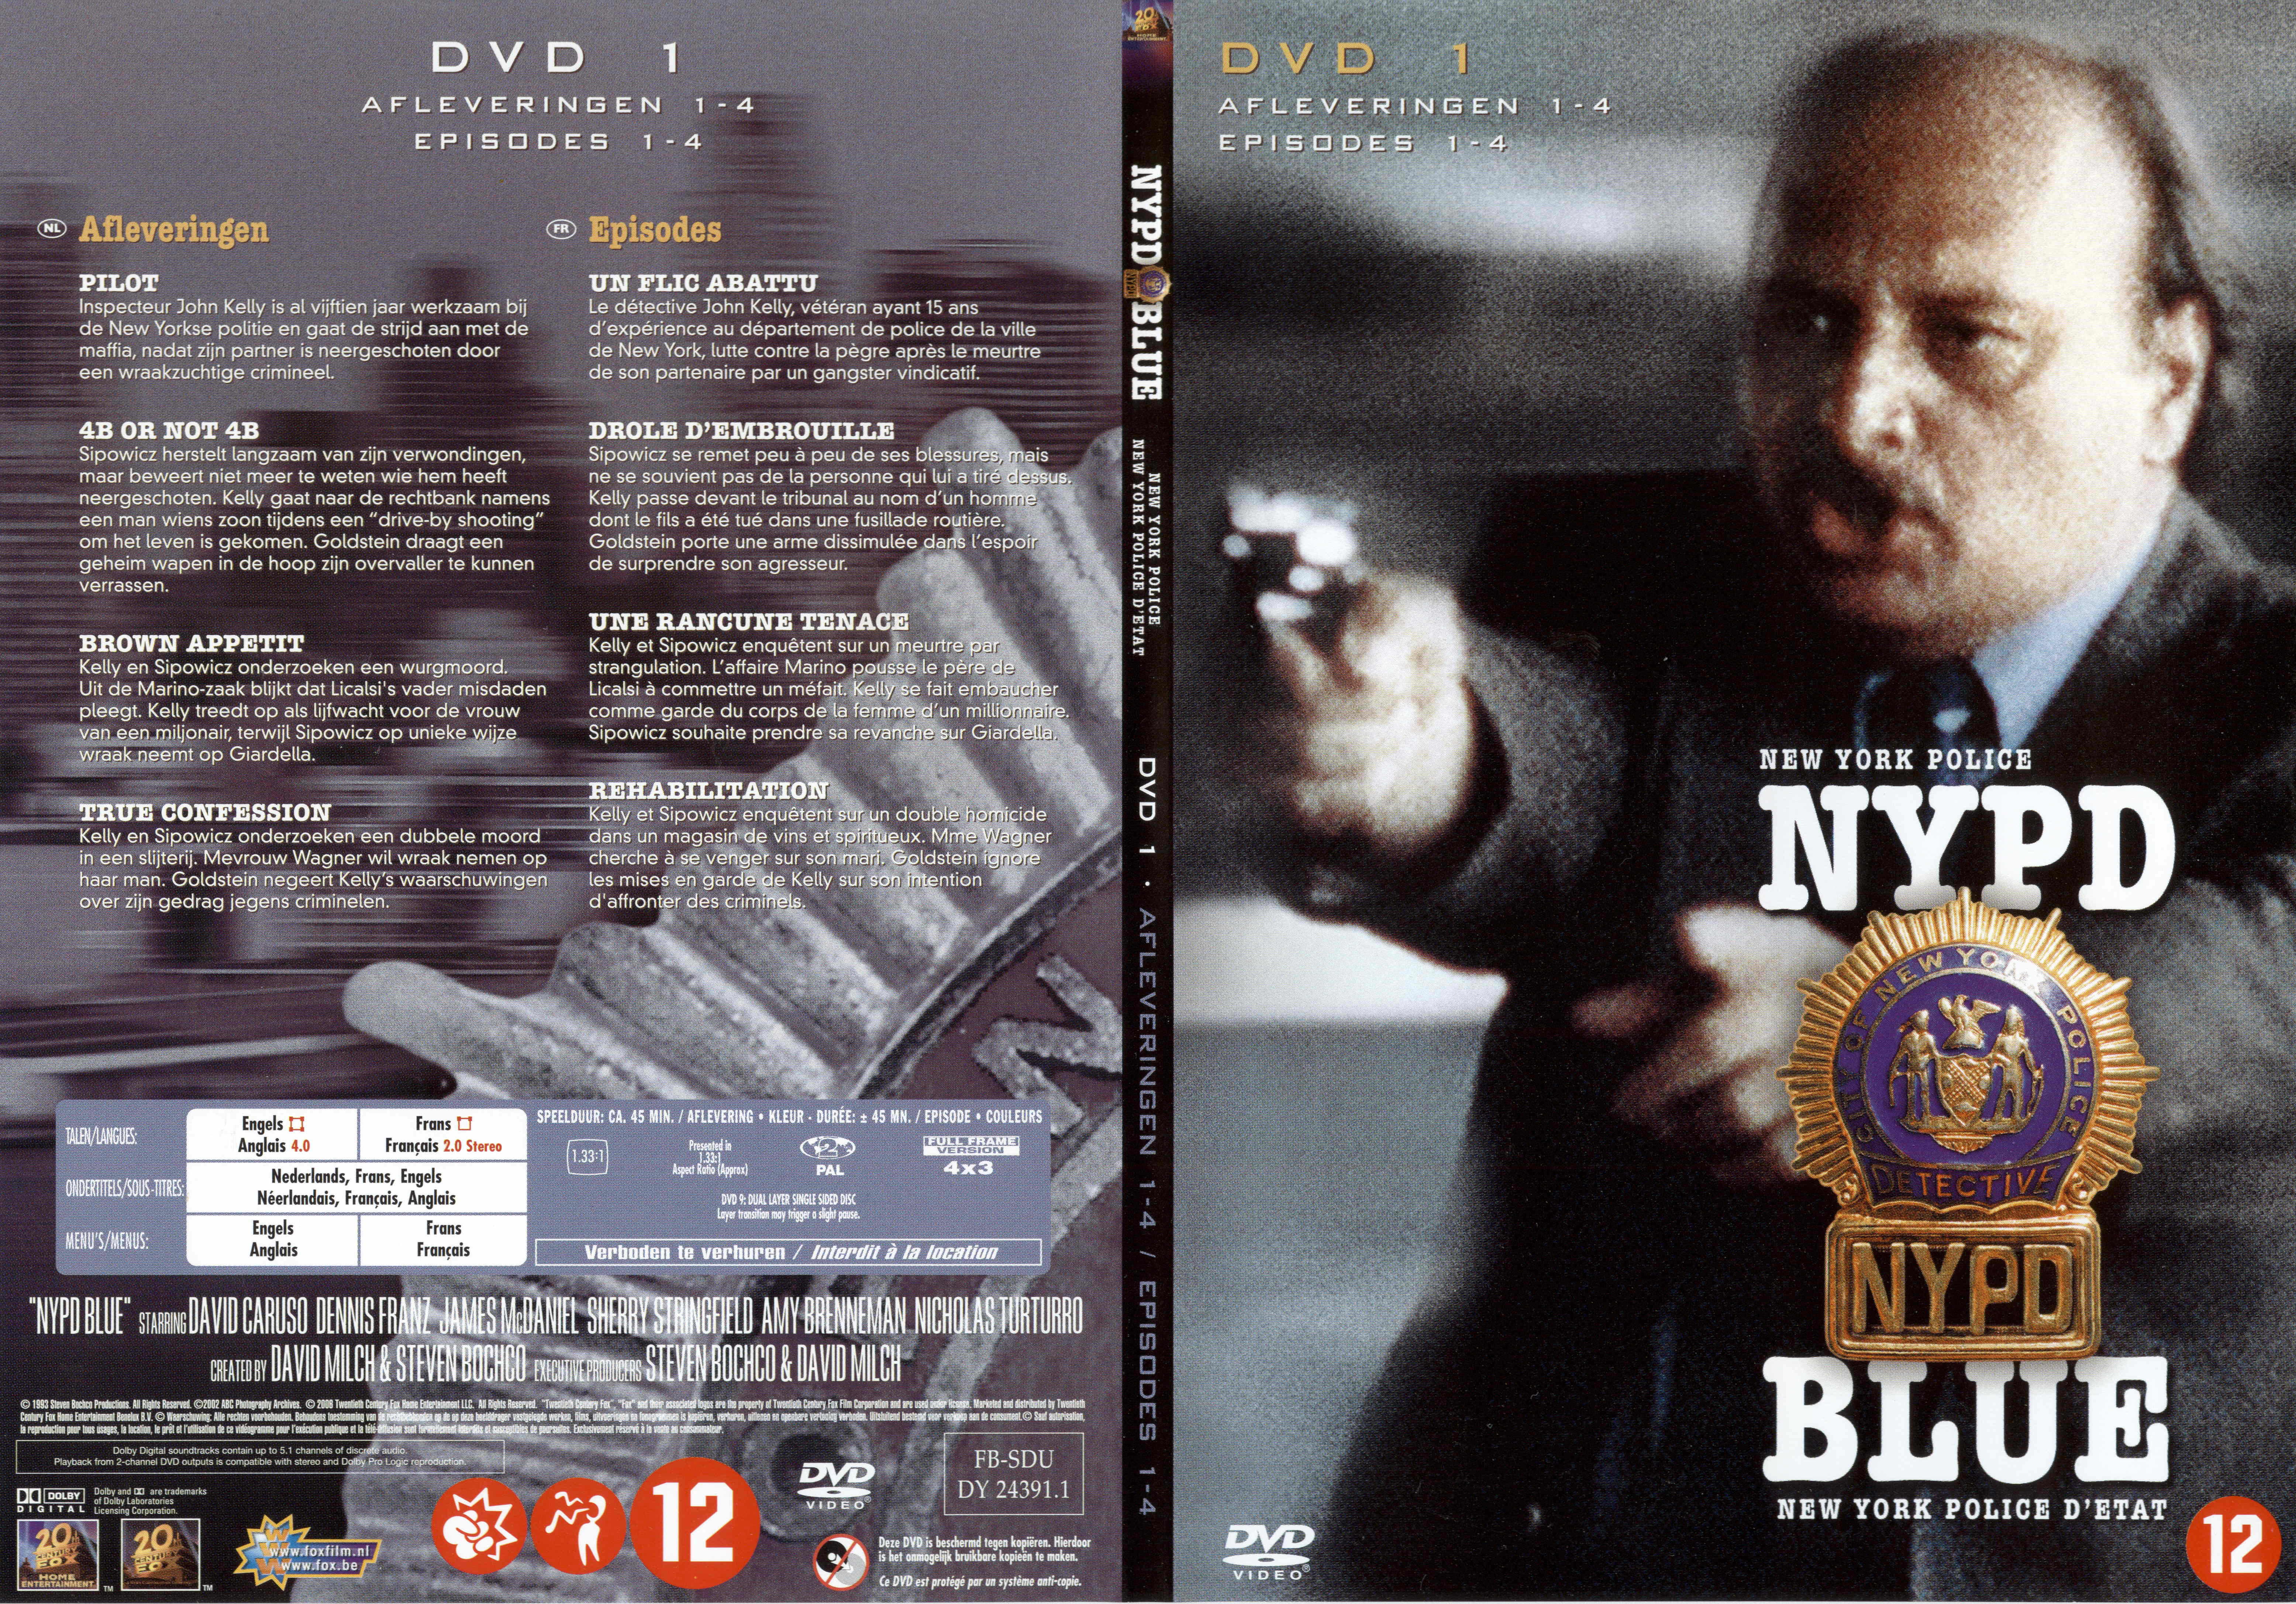 Jaquette DVD NYPD Blue saison 01 dvd 01 v2